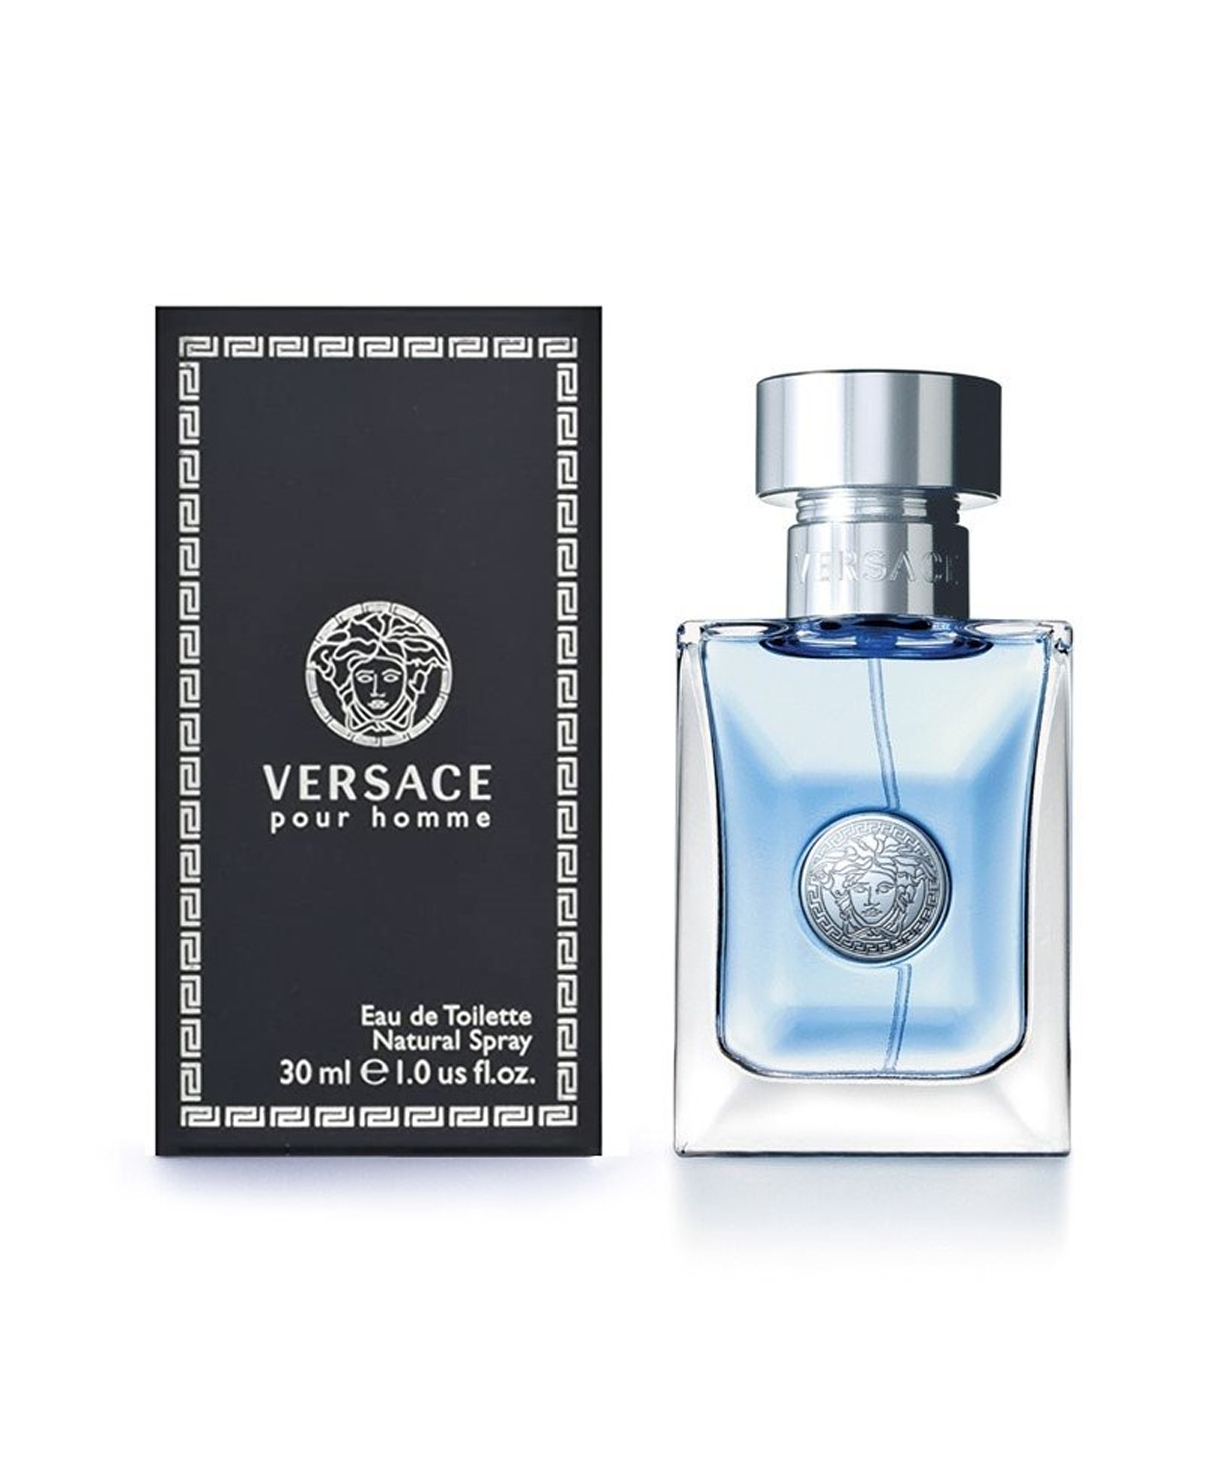 Perfume «Versace» for men, 30 ml